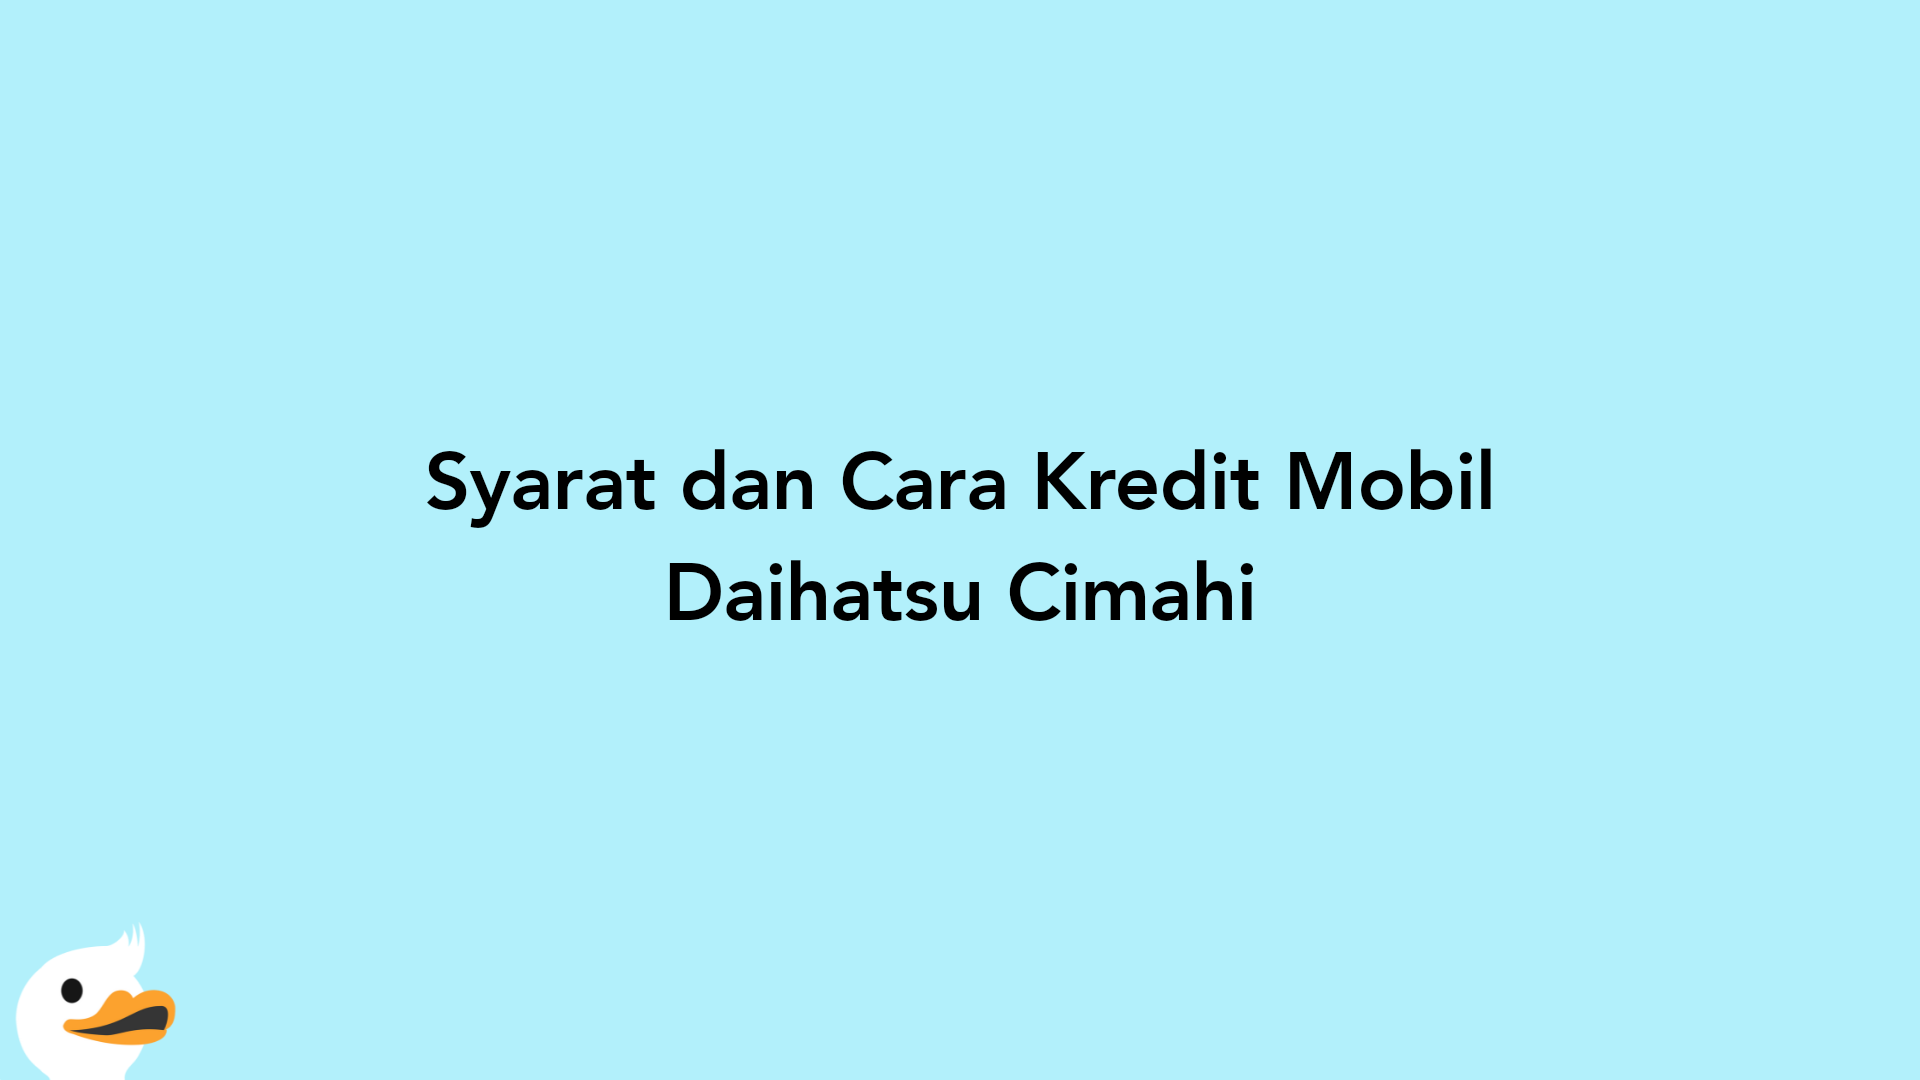 Syarat dan Cara Kredit Mobil Daihatsu Cimahi